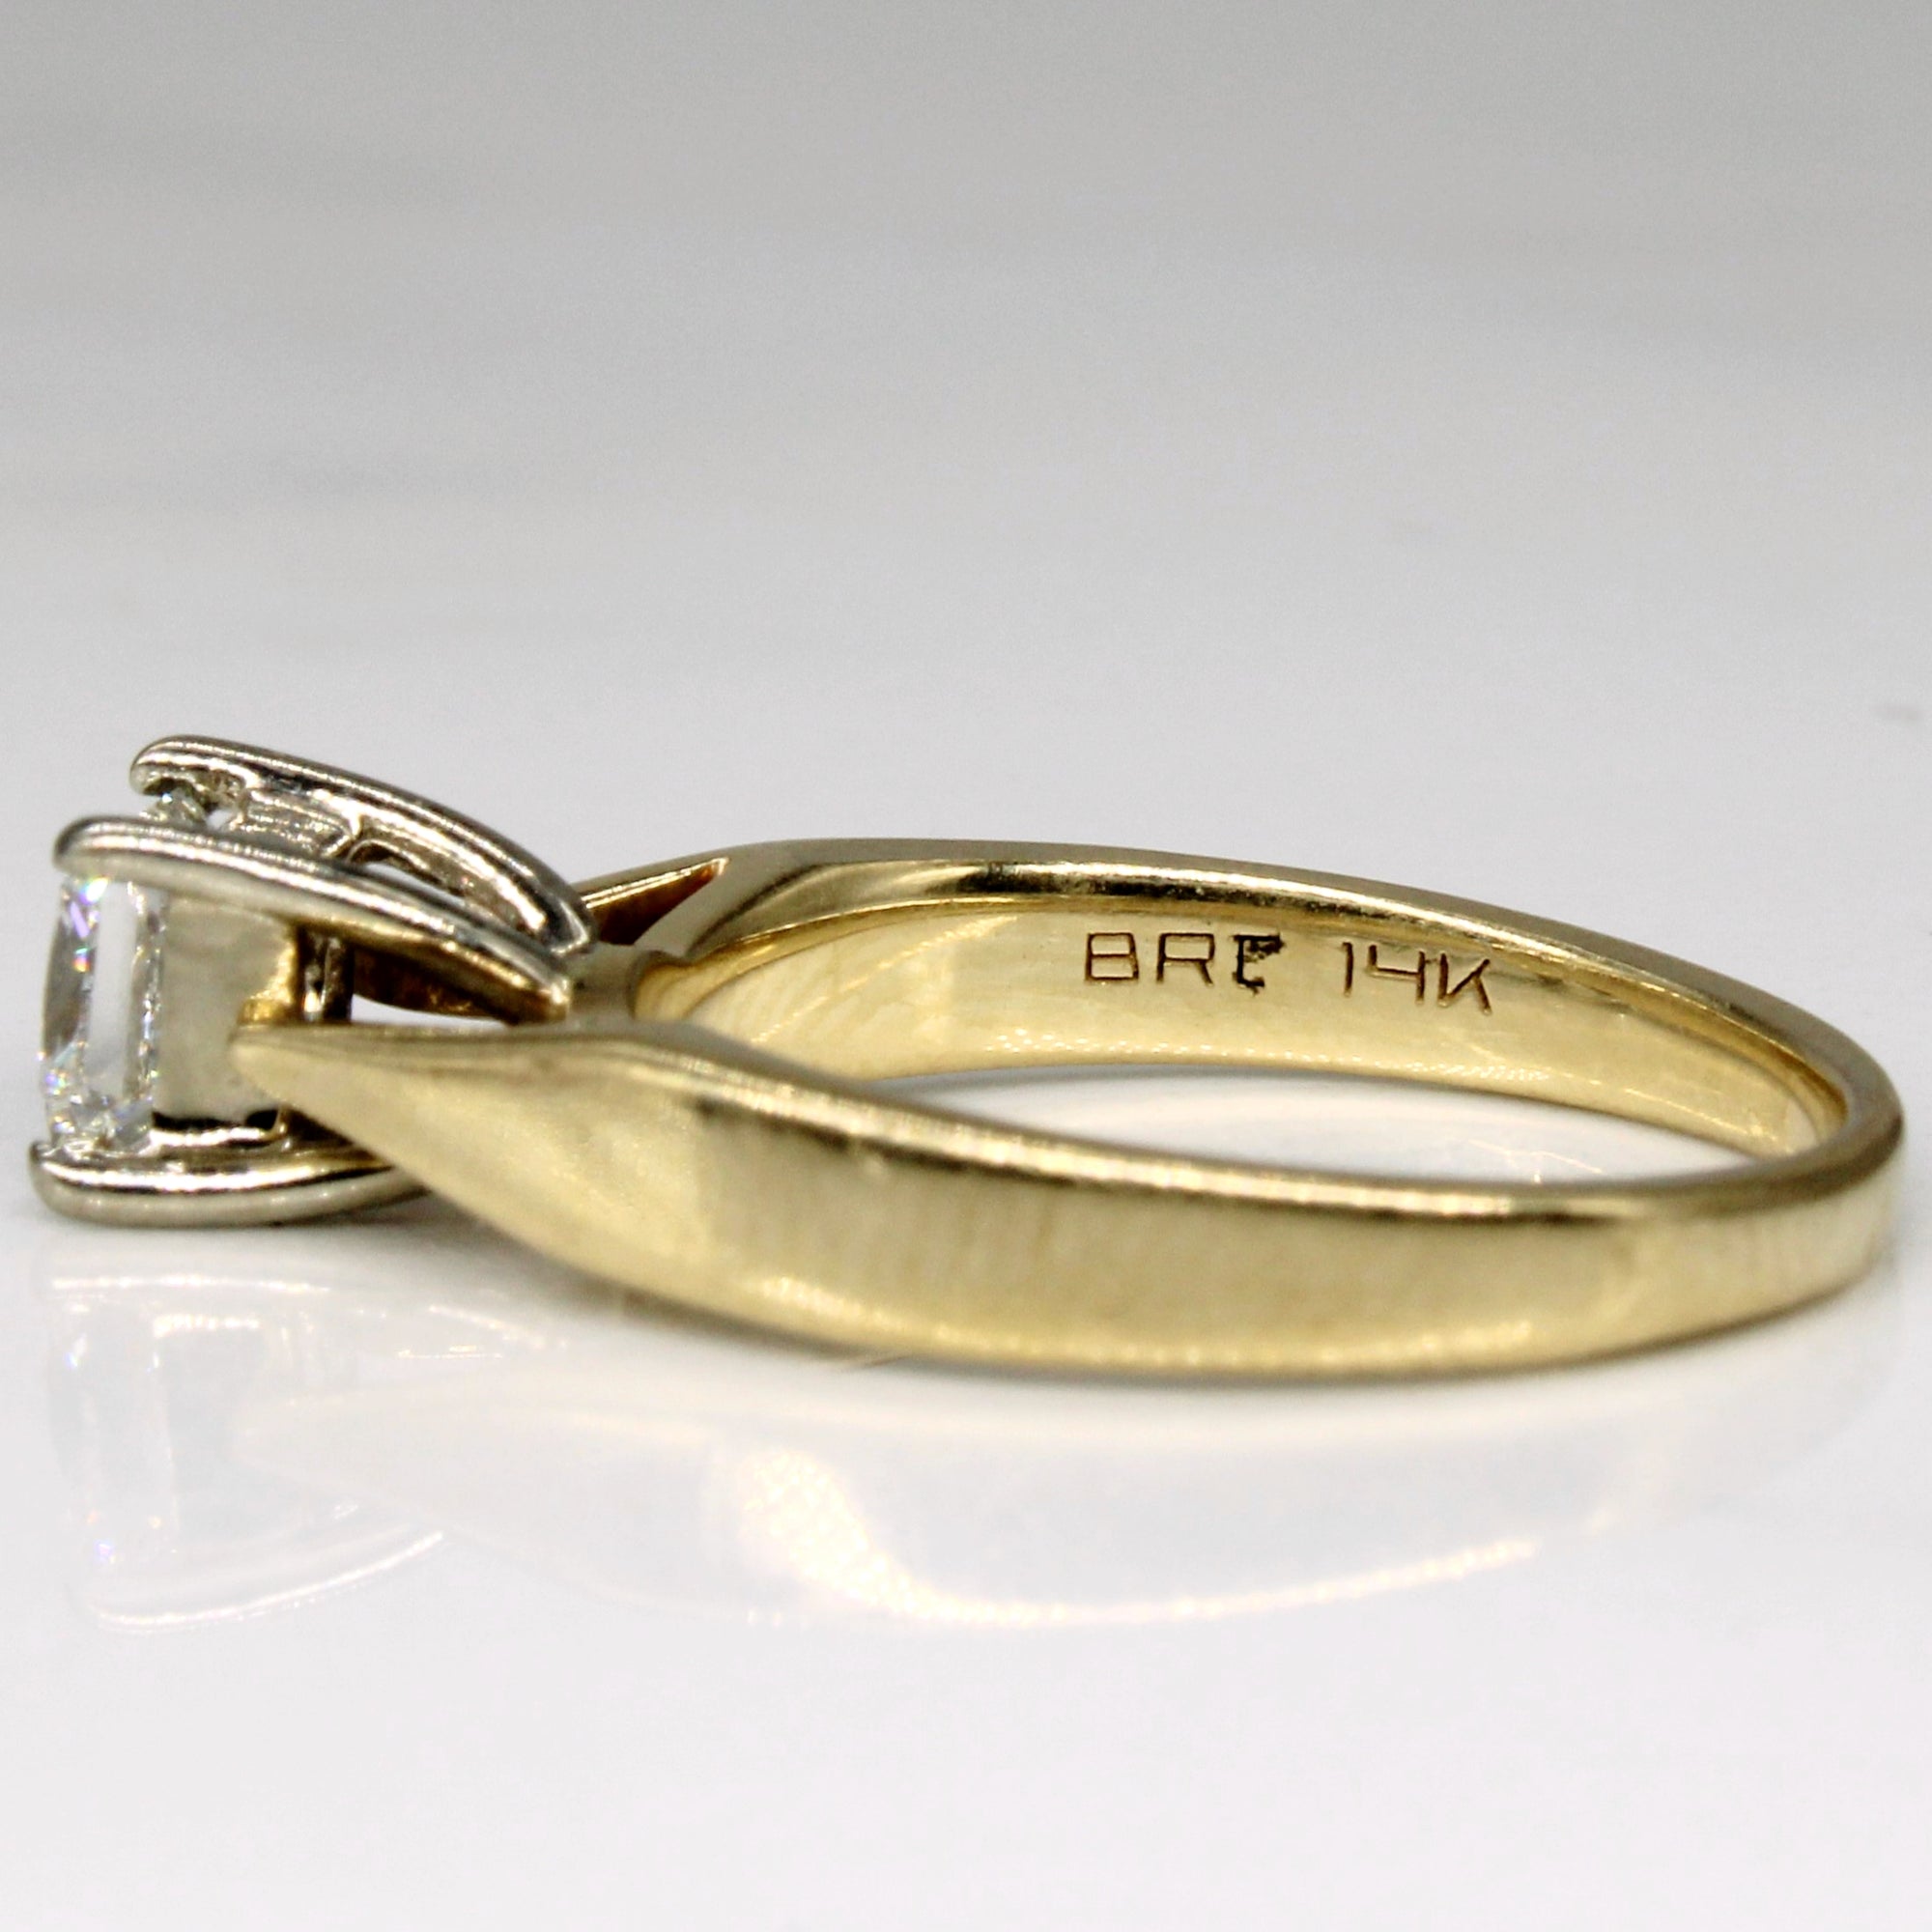 Princess Cut Diamond Engagement Ring | 0.40ct | SZ 3.25 |